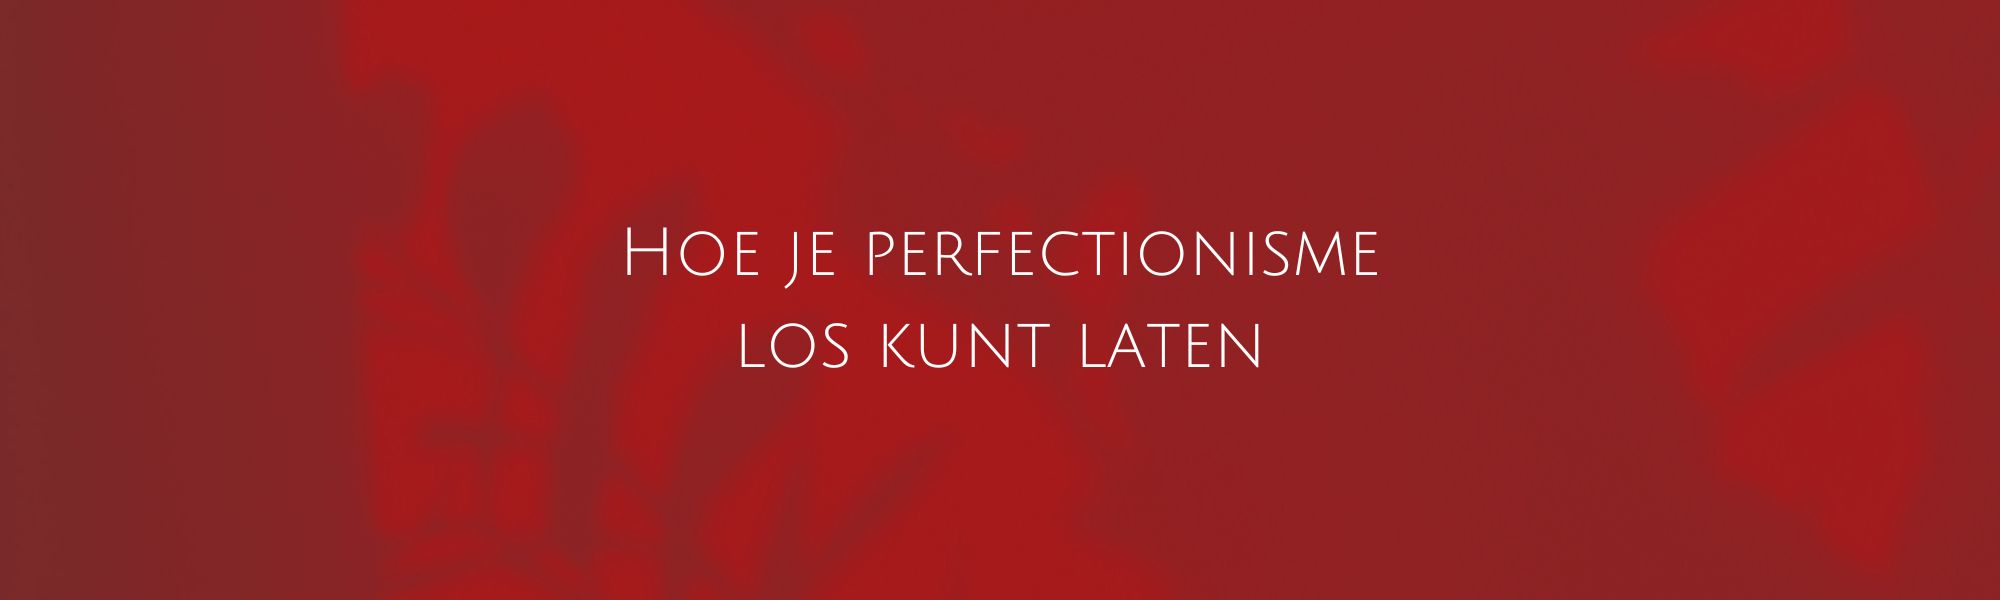 Hoe je perfectionisme los kunt laten